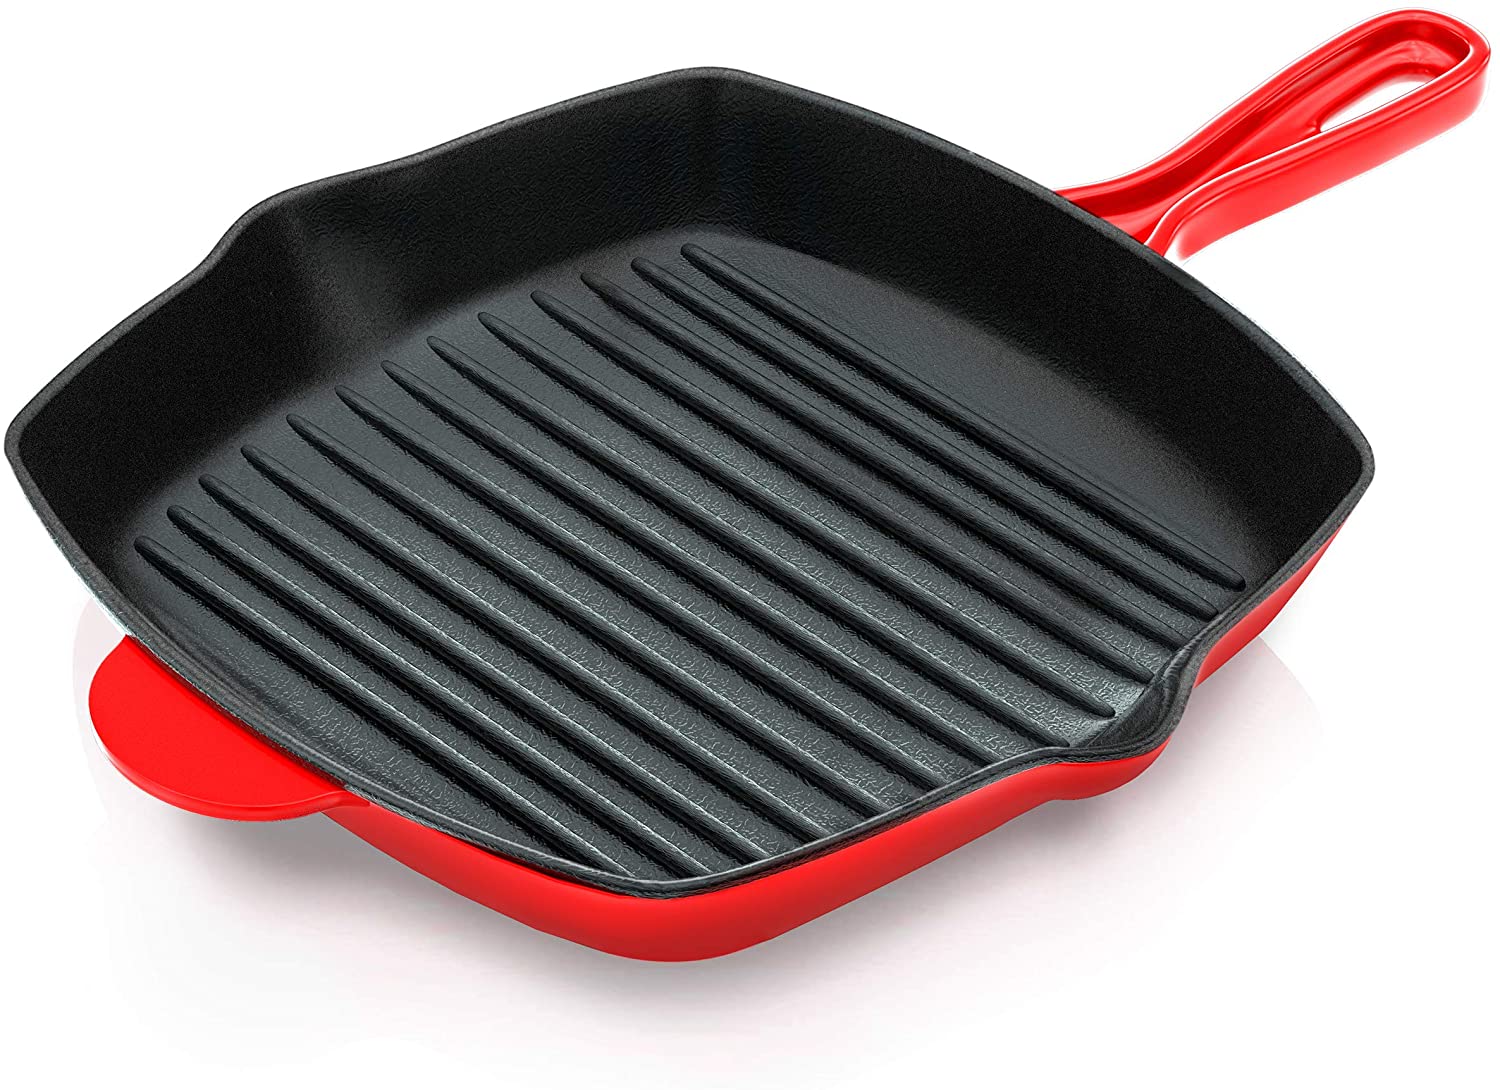 NutriChef Heat-Safe Nonstick Cast Iron Grill Pan, 11-Inch